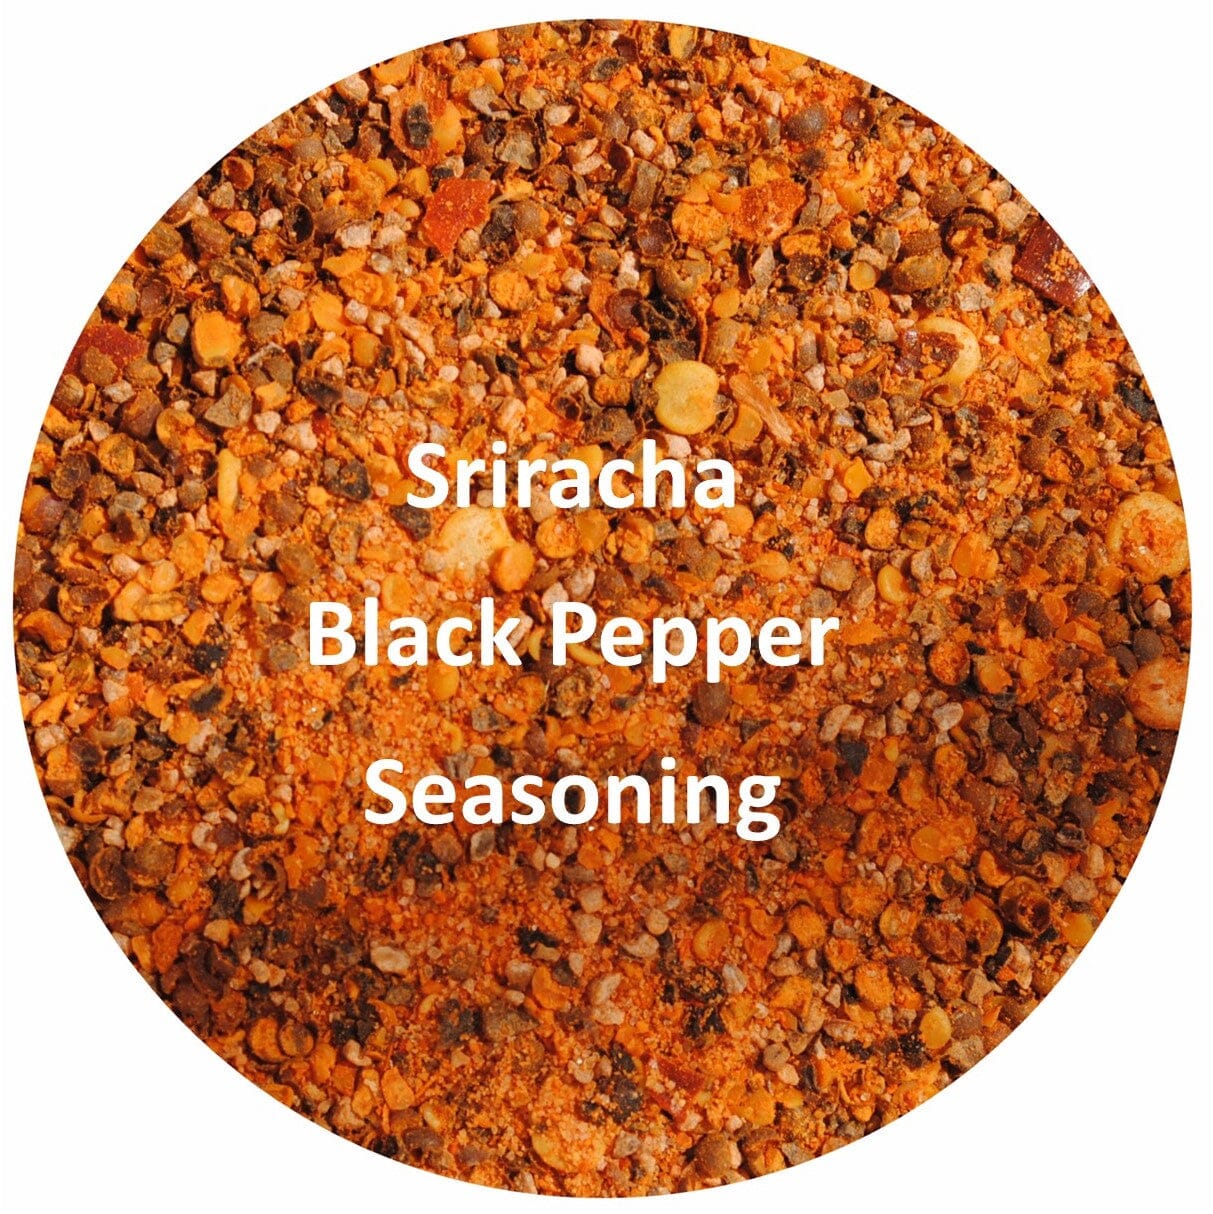 Sriracha Hot Ground Black Pepper Seasoning 20 oz Easy Shaker - Unique Flavors Seasonings Unique Flavors LLC 